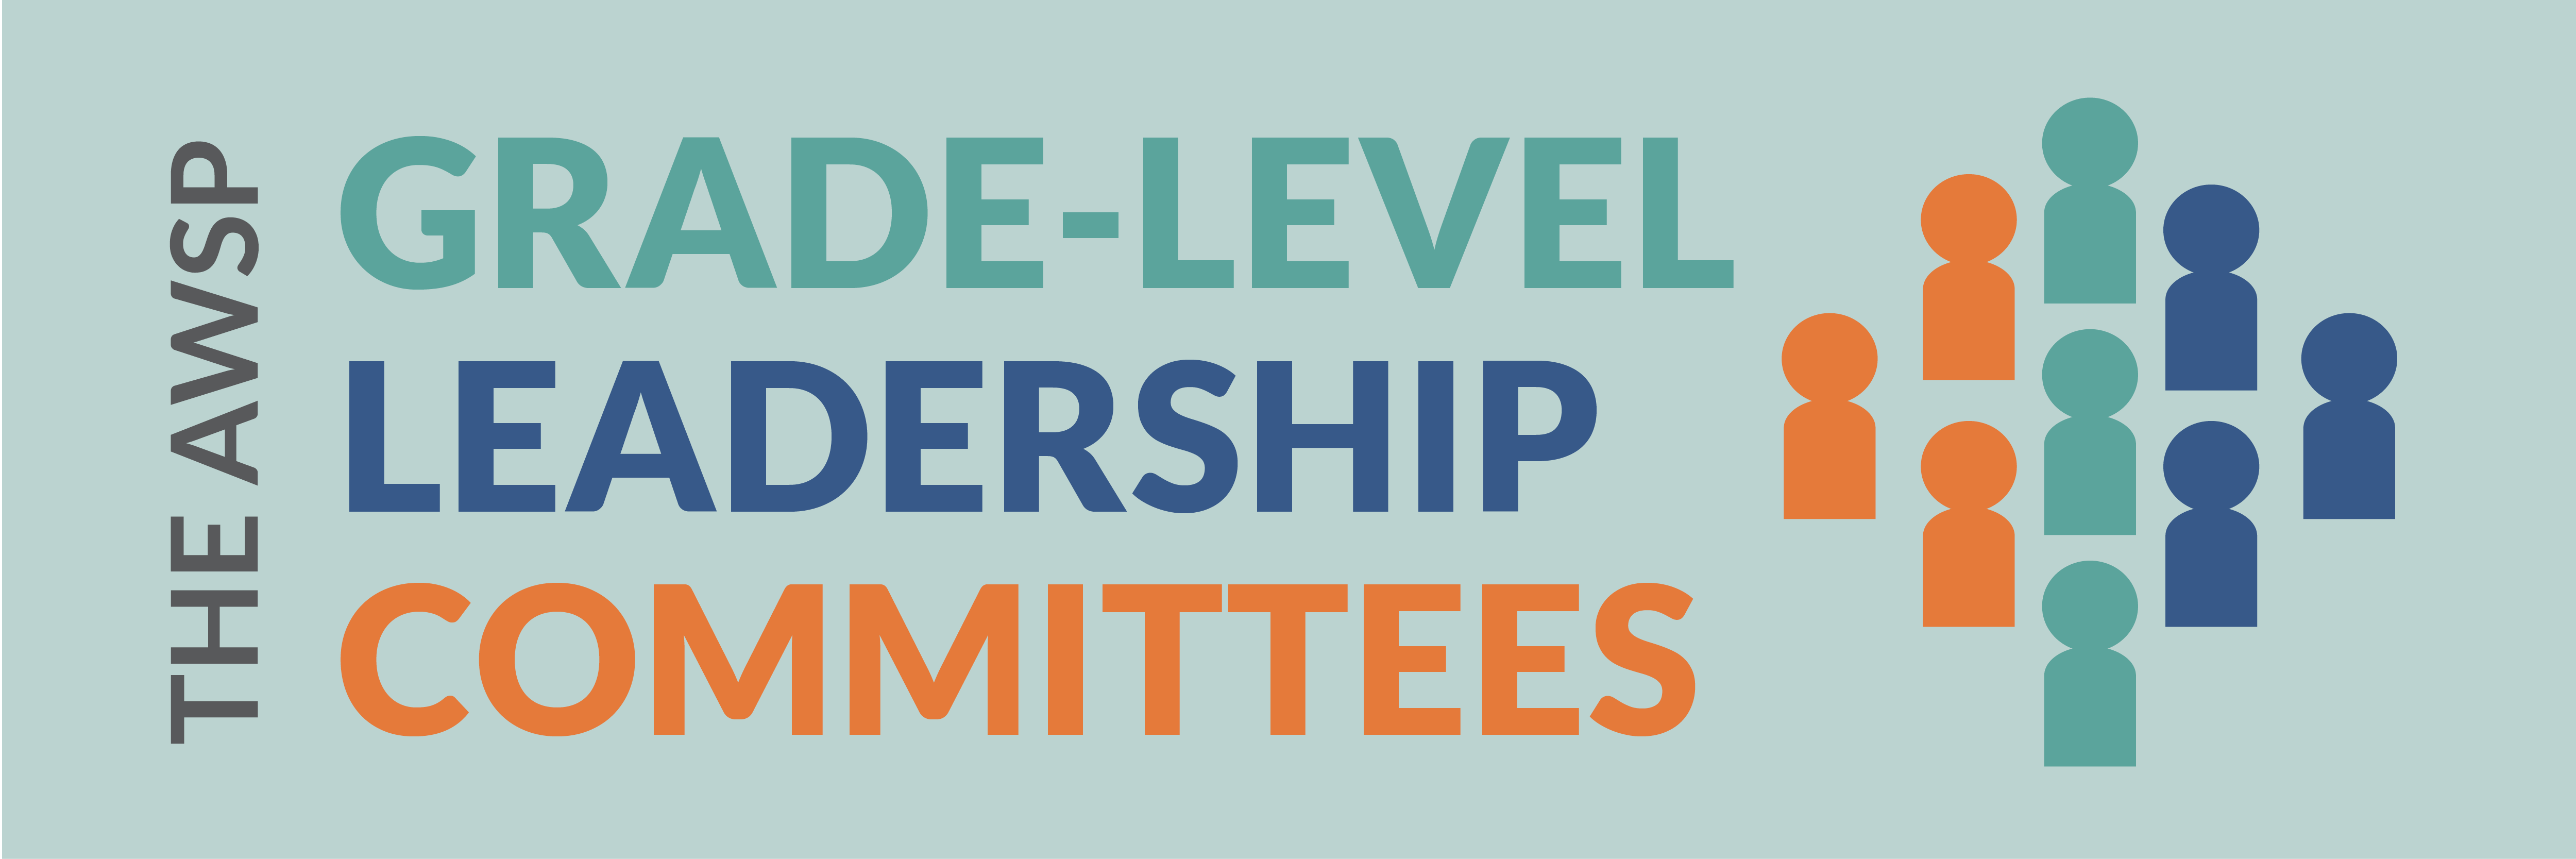 Grade Level Leadership Committee image header